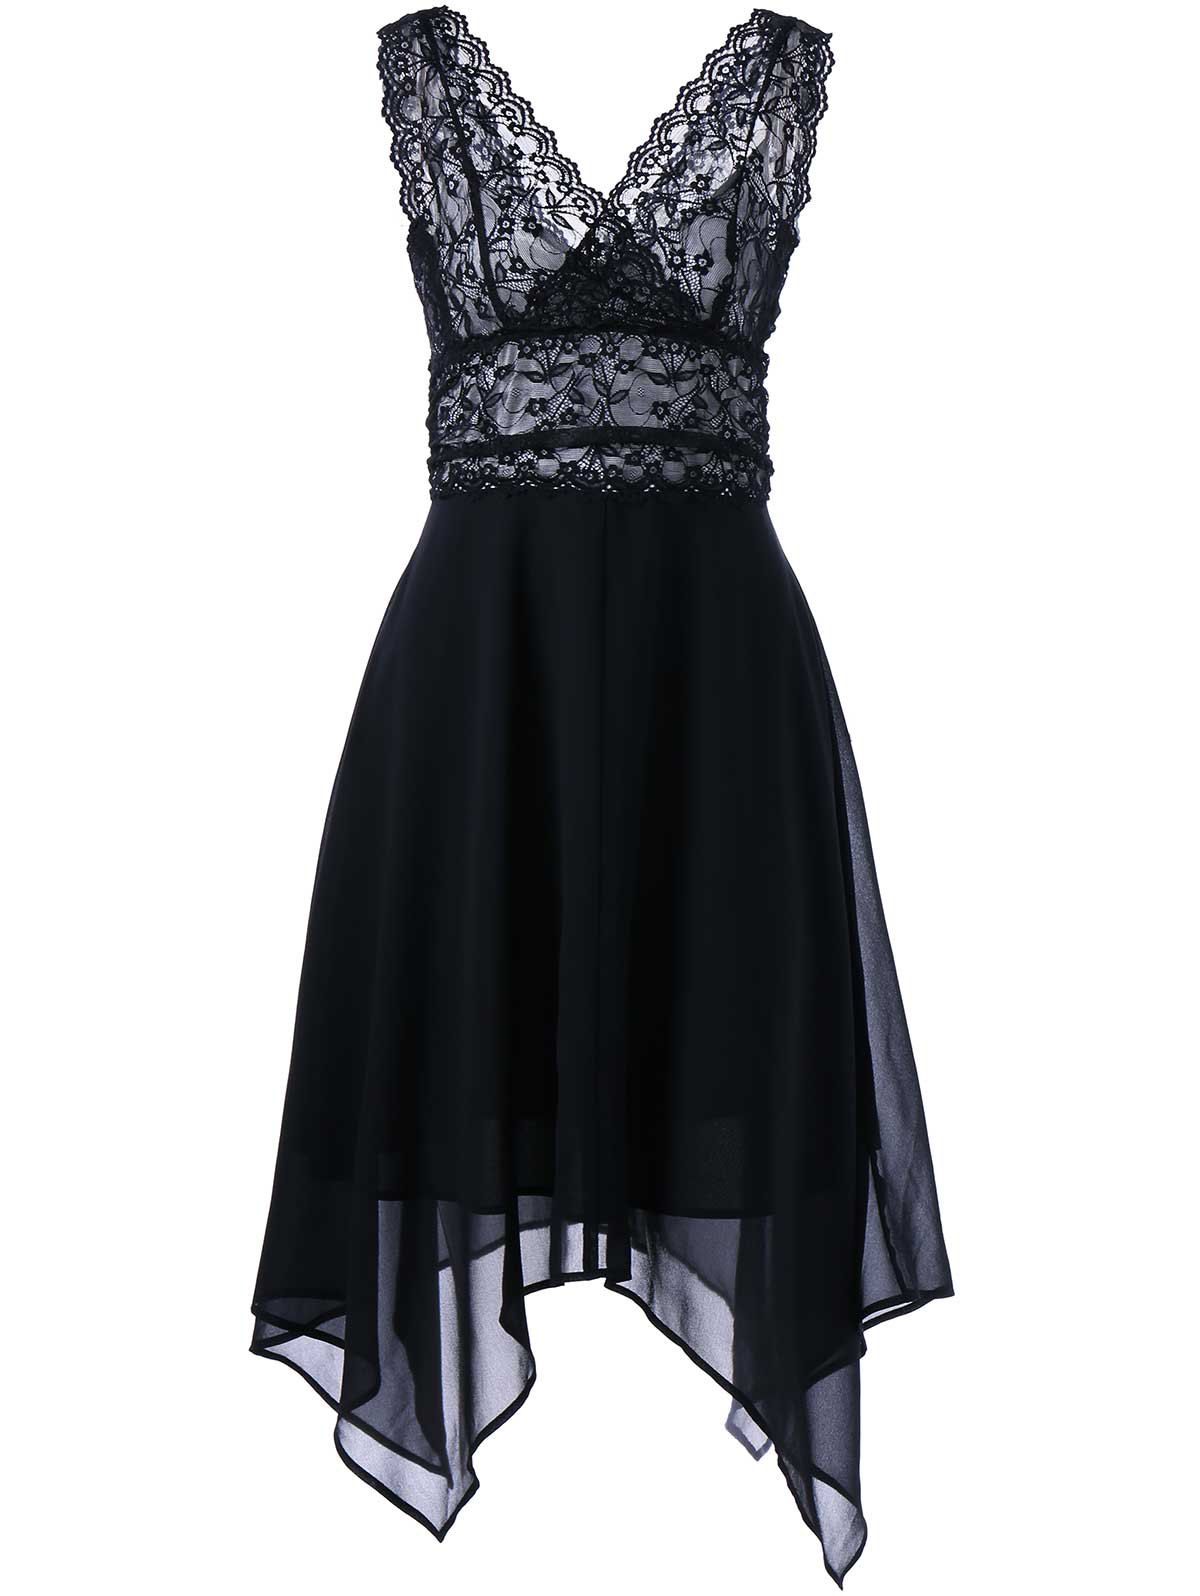 [17% OFF] 2021 Sleeveless Chiffon Lace Party Dress In BLACK | DressLily